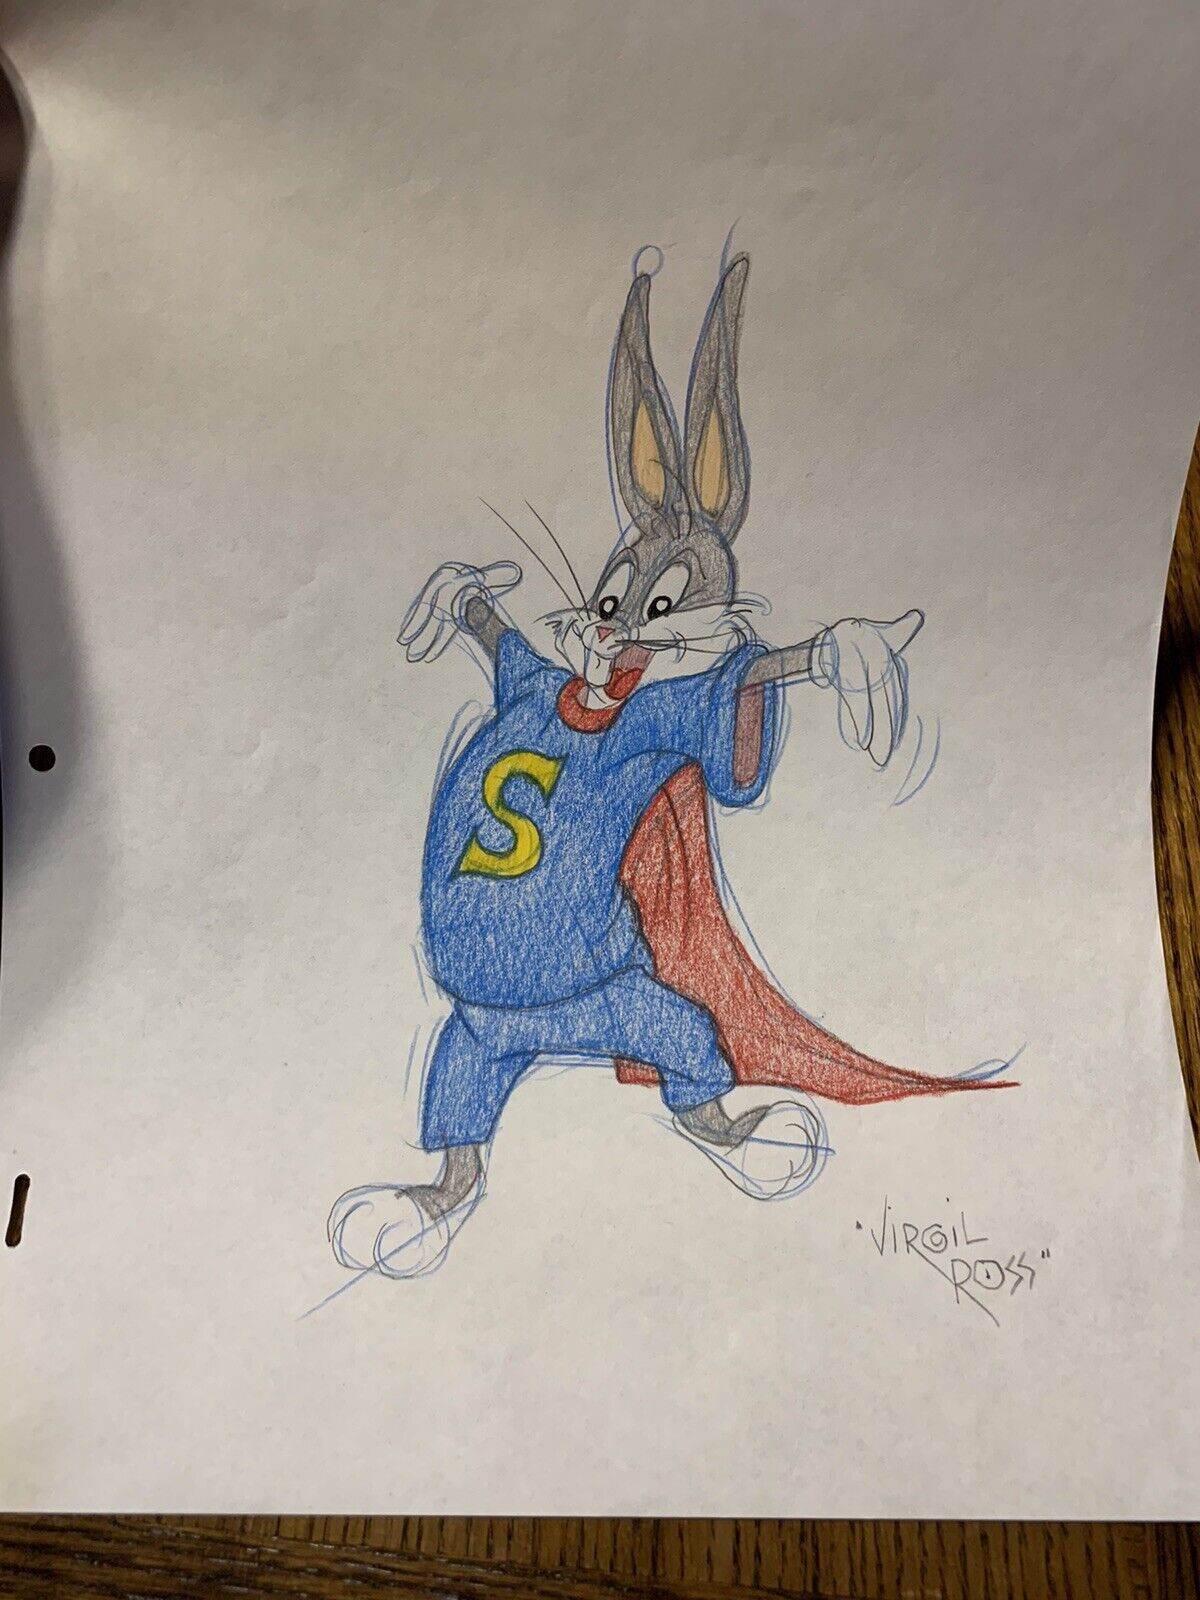 Virgil Ross Sketch - Superman Bugs Bunny RARE Signed 12.5x10.5”